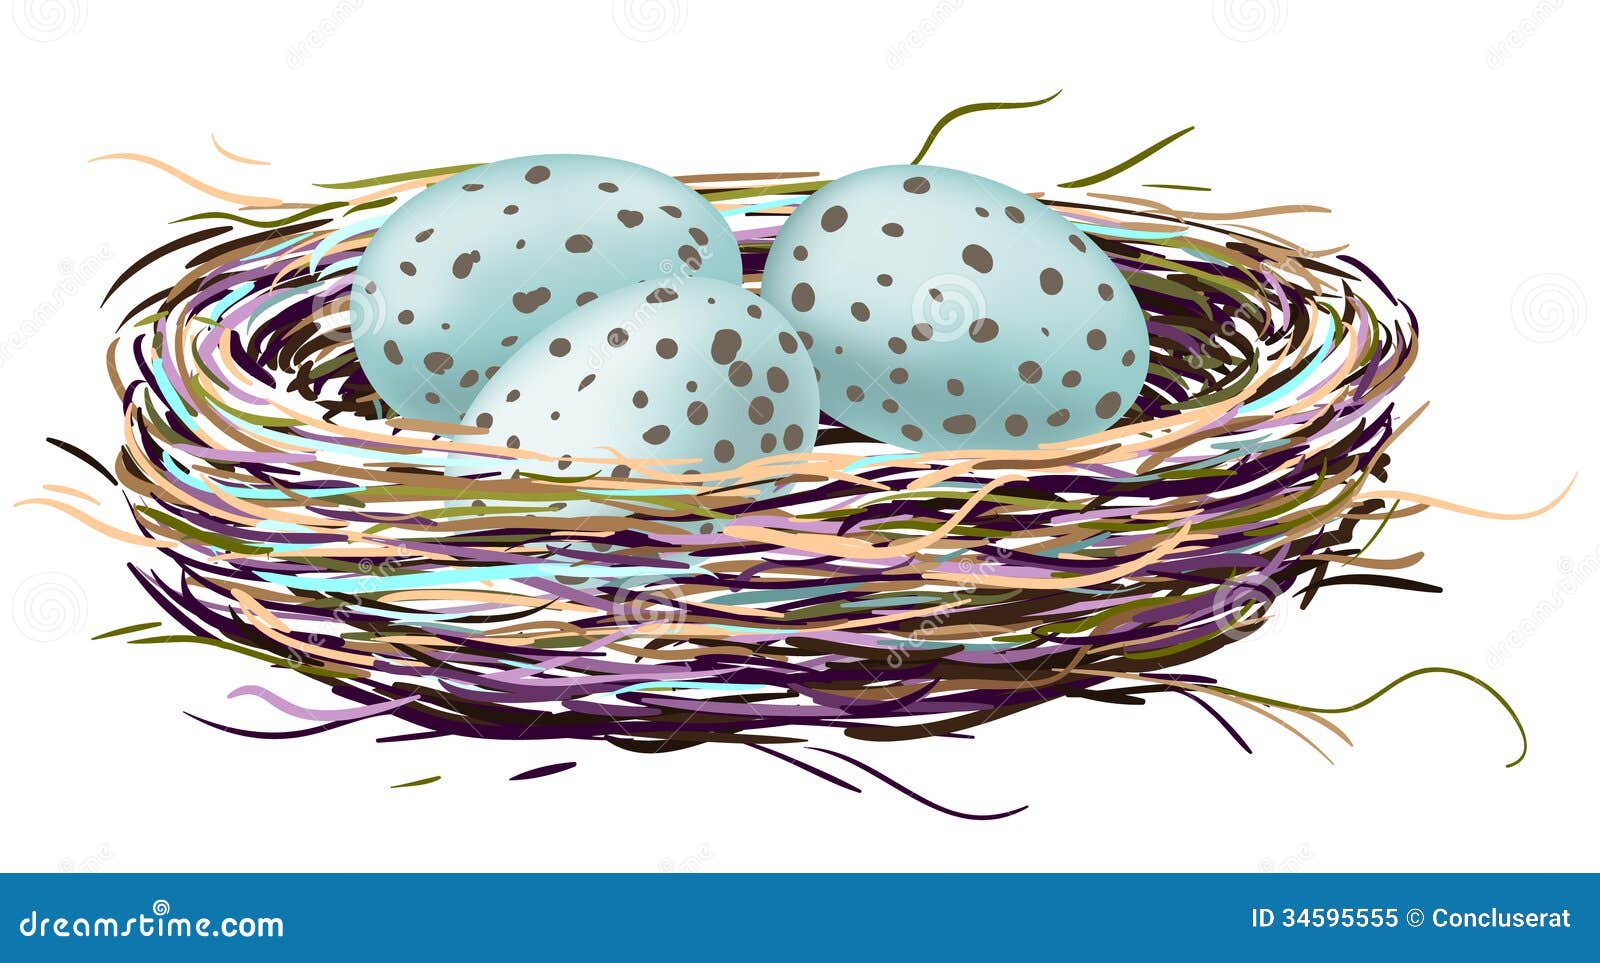 clipart birds nest eggs - photo #20